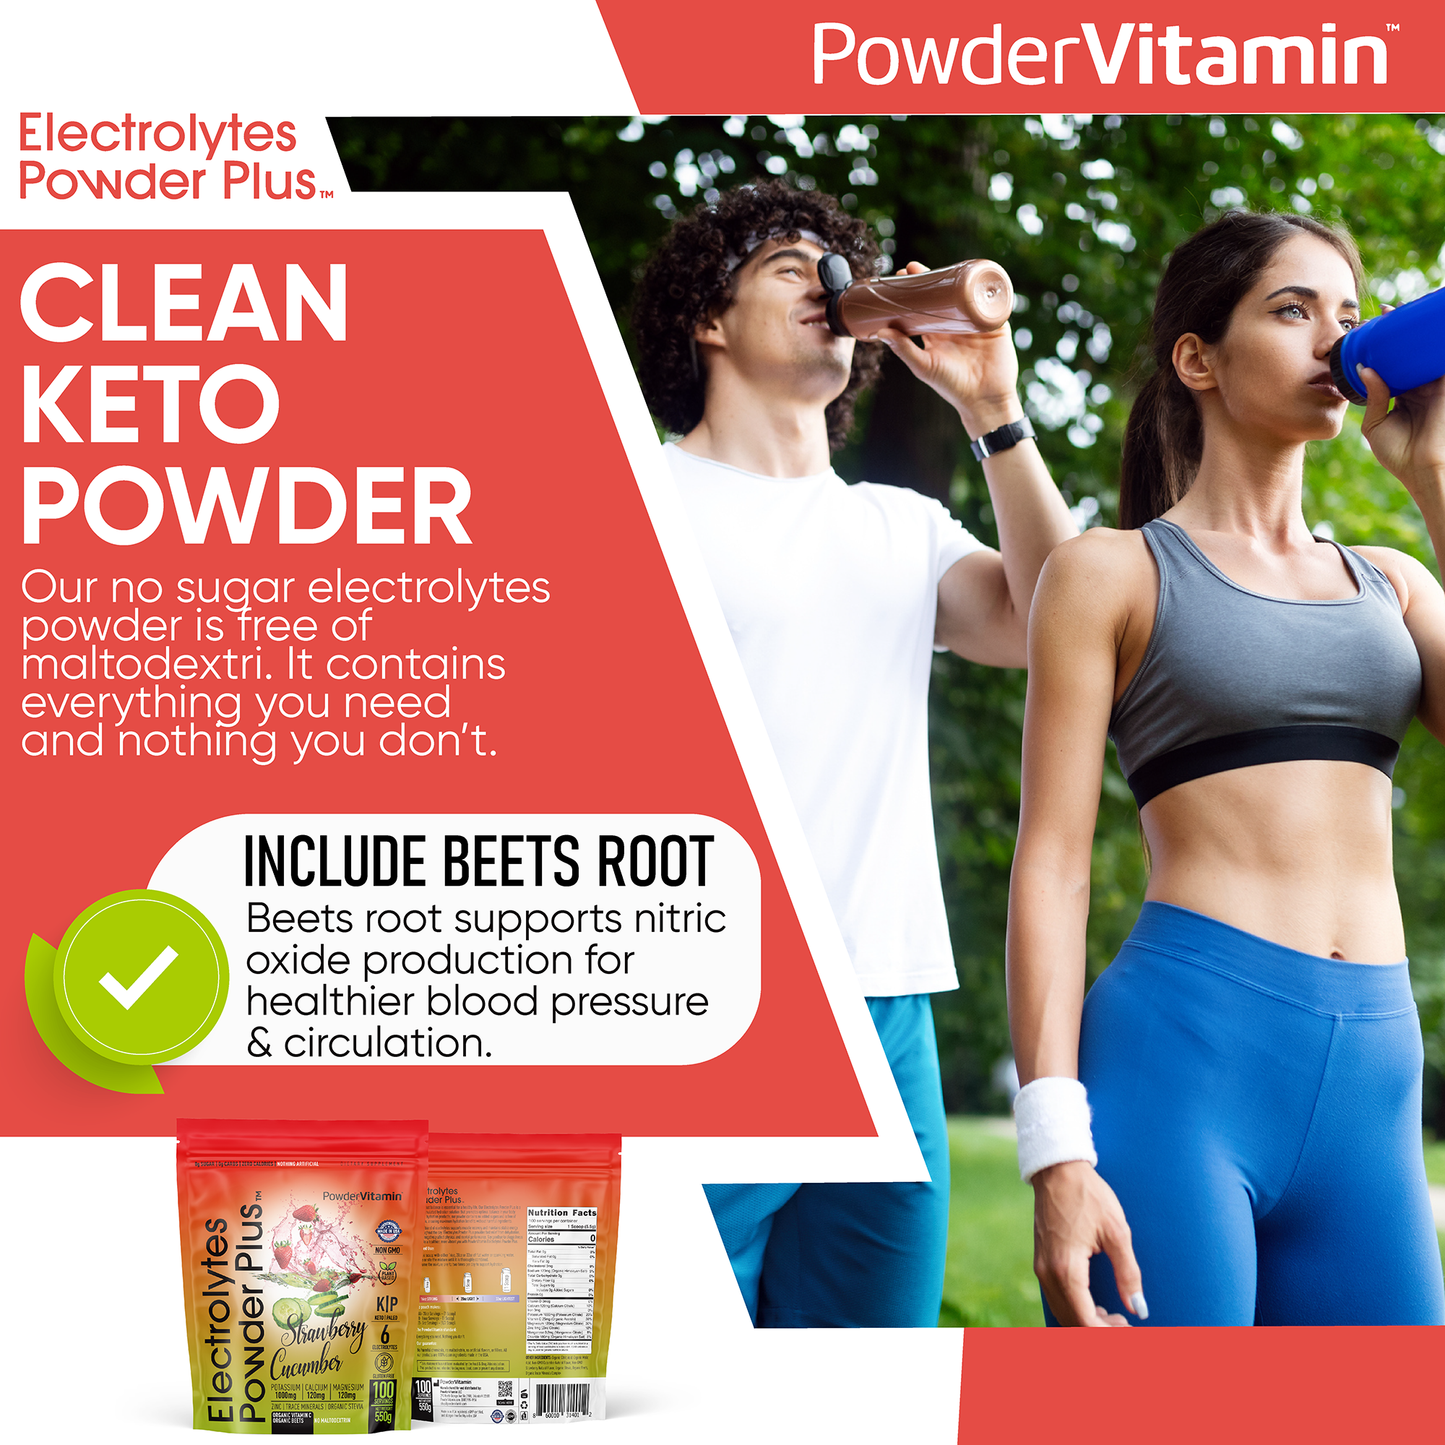 Strawberry Cucumber Electrolytes Powder 100 Servings